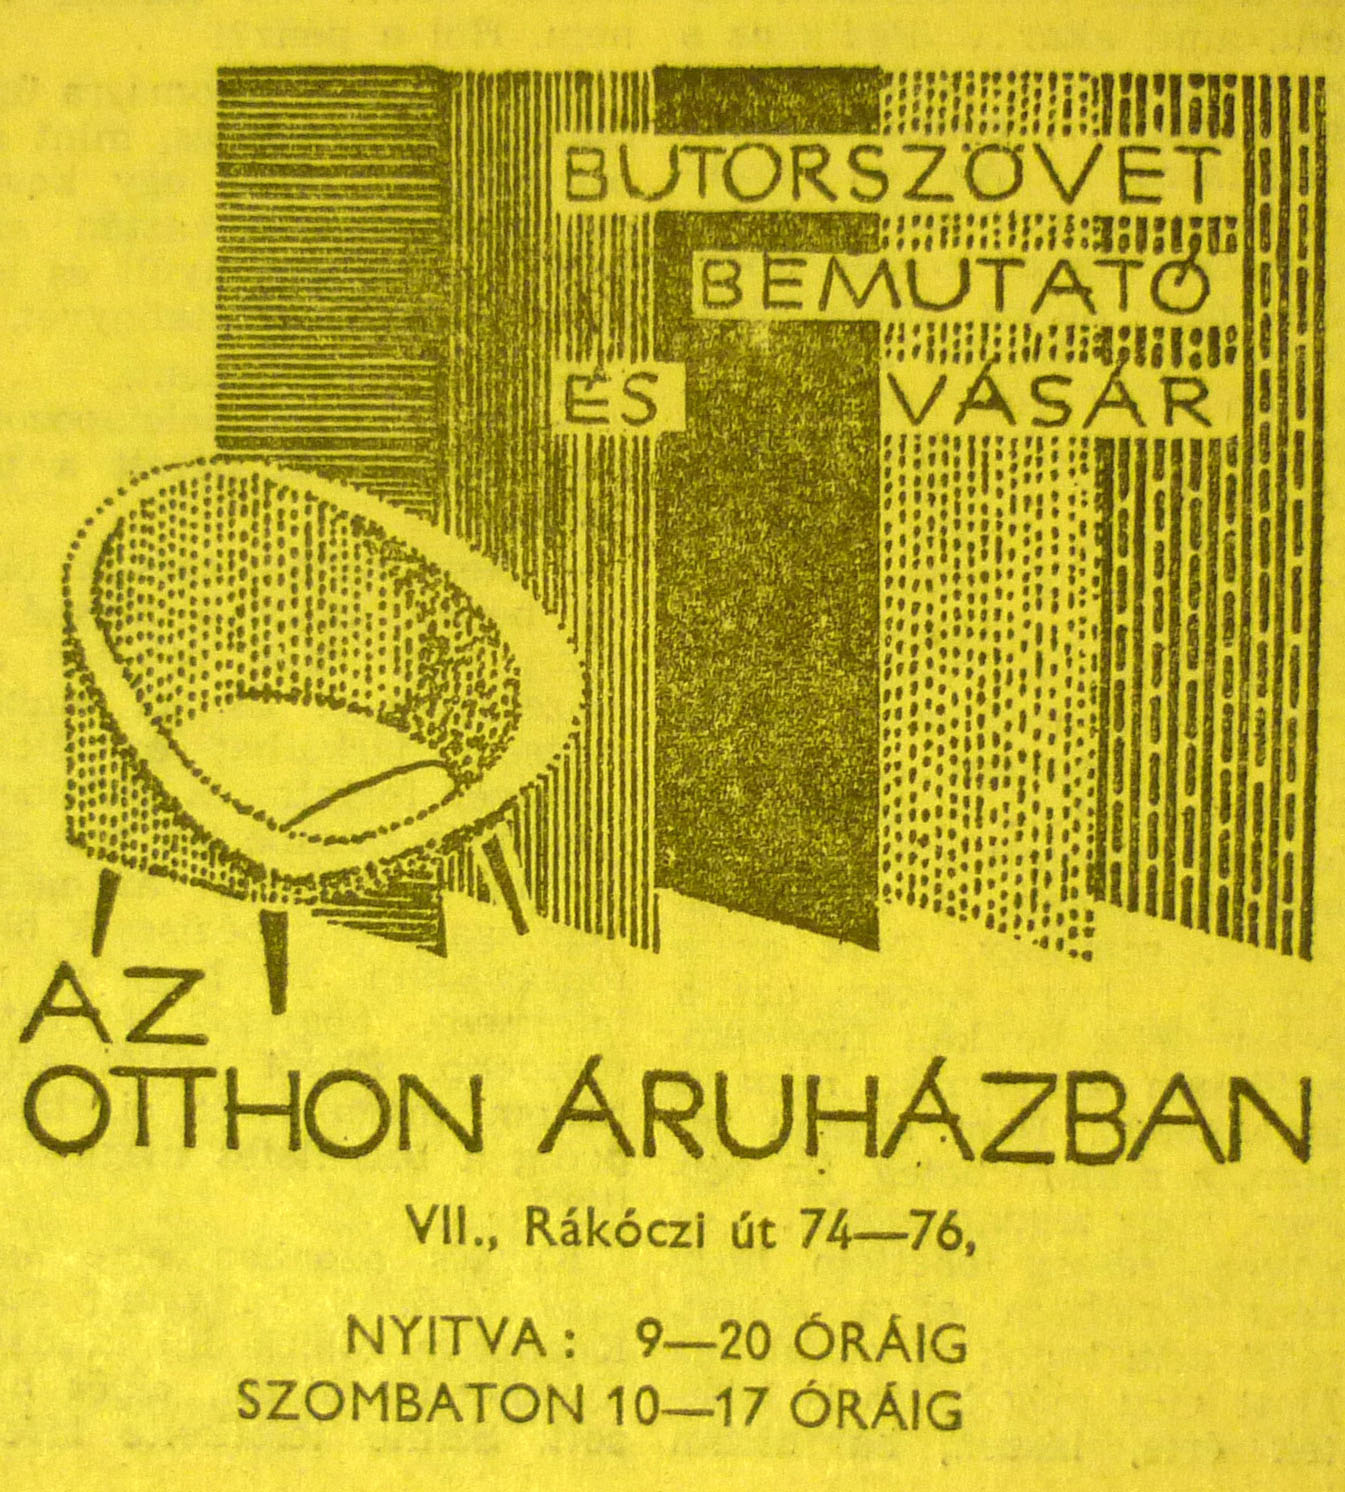 OtthonAruhaz-196509-MagyarNemzetHirdetes